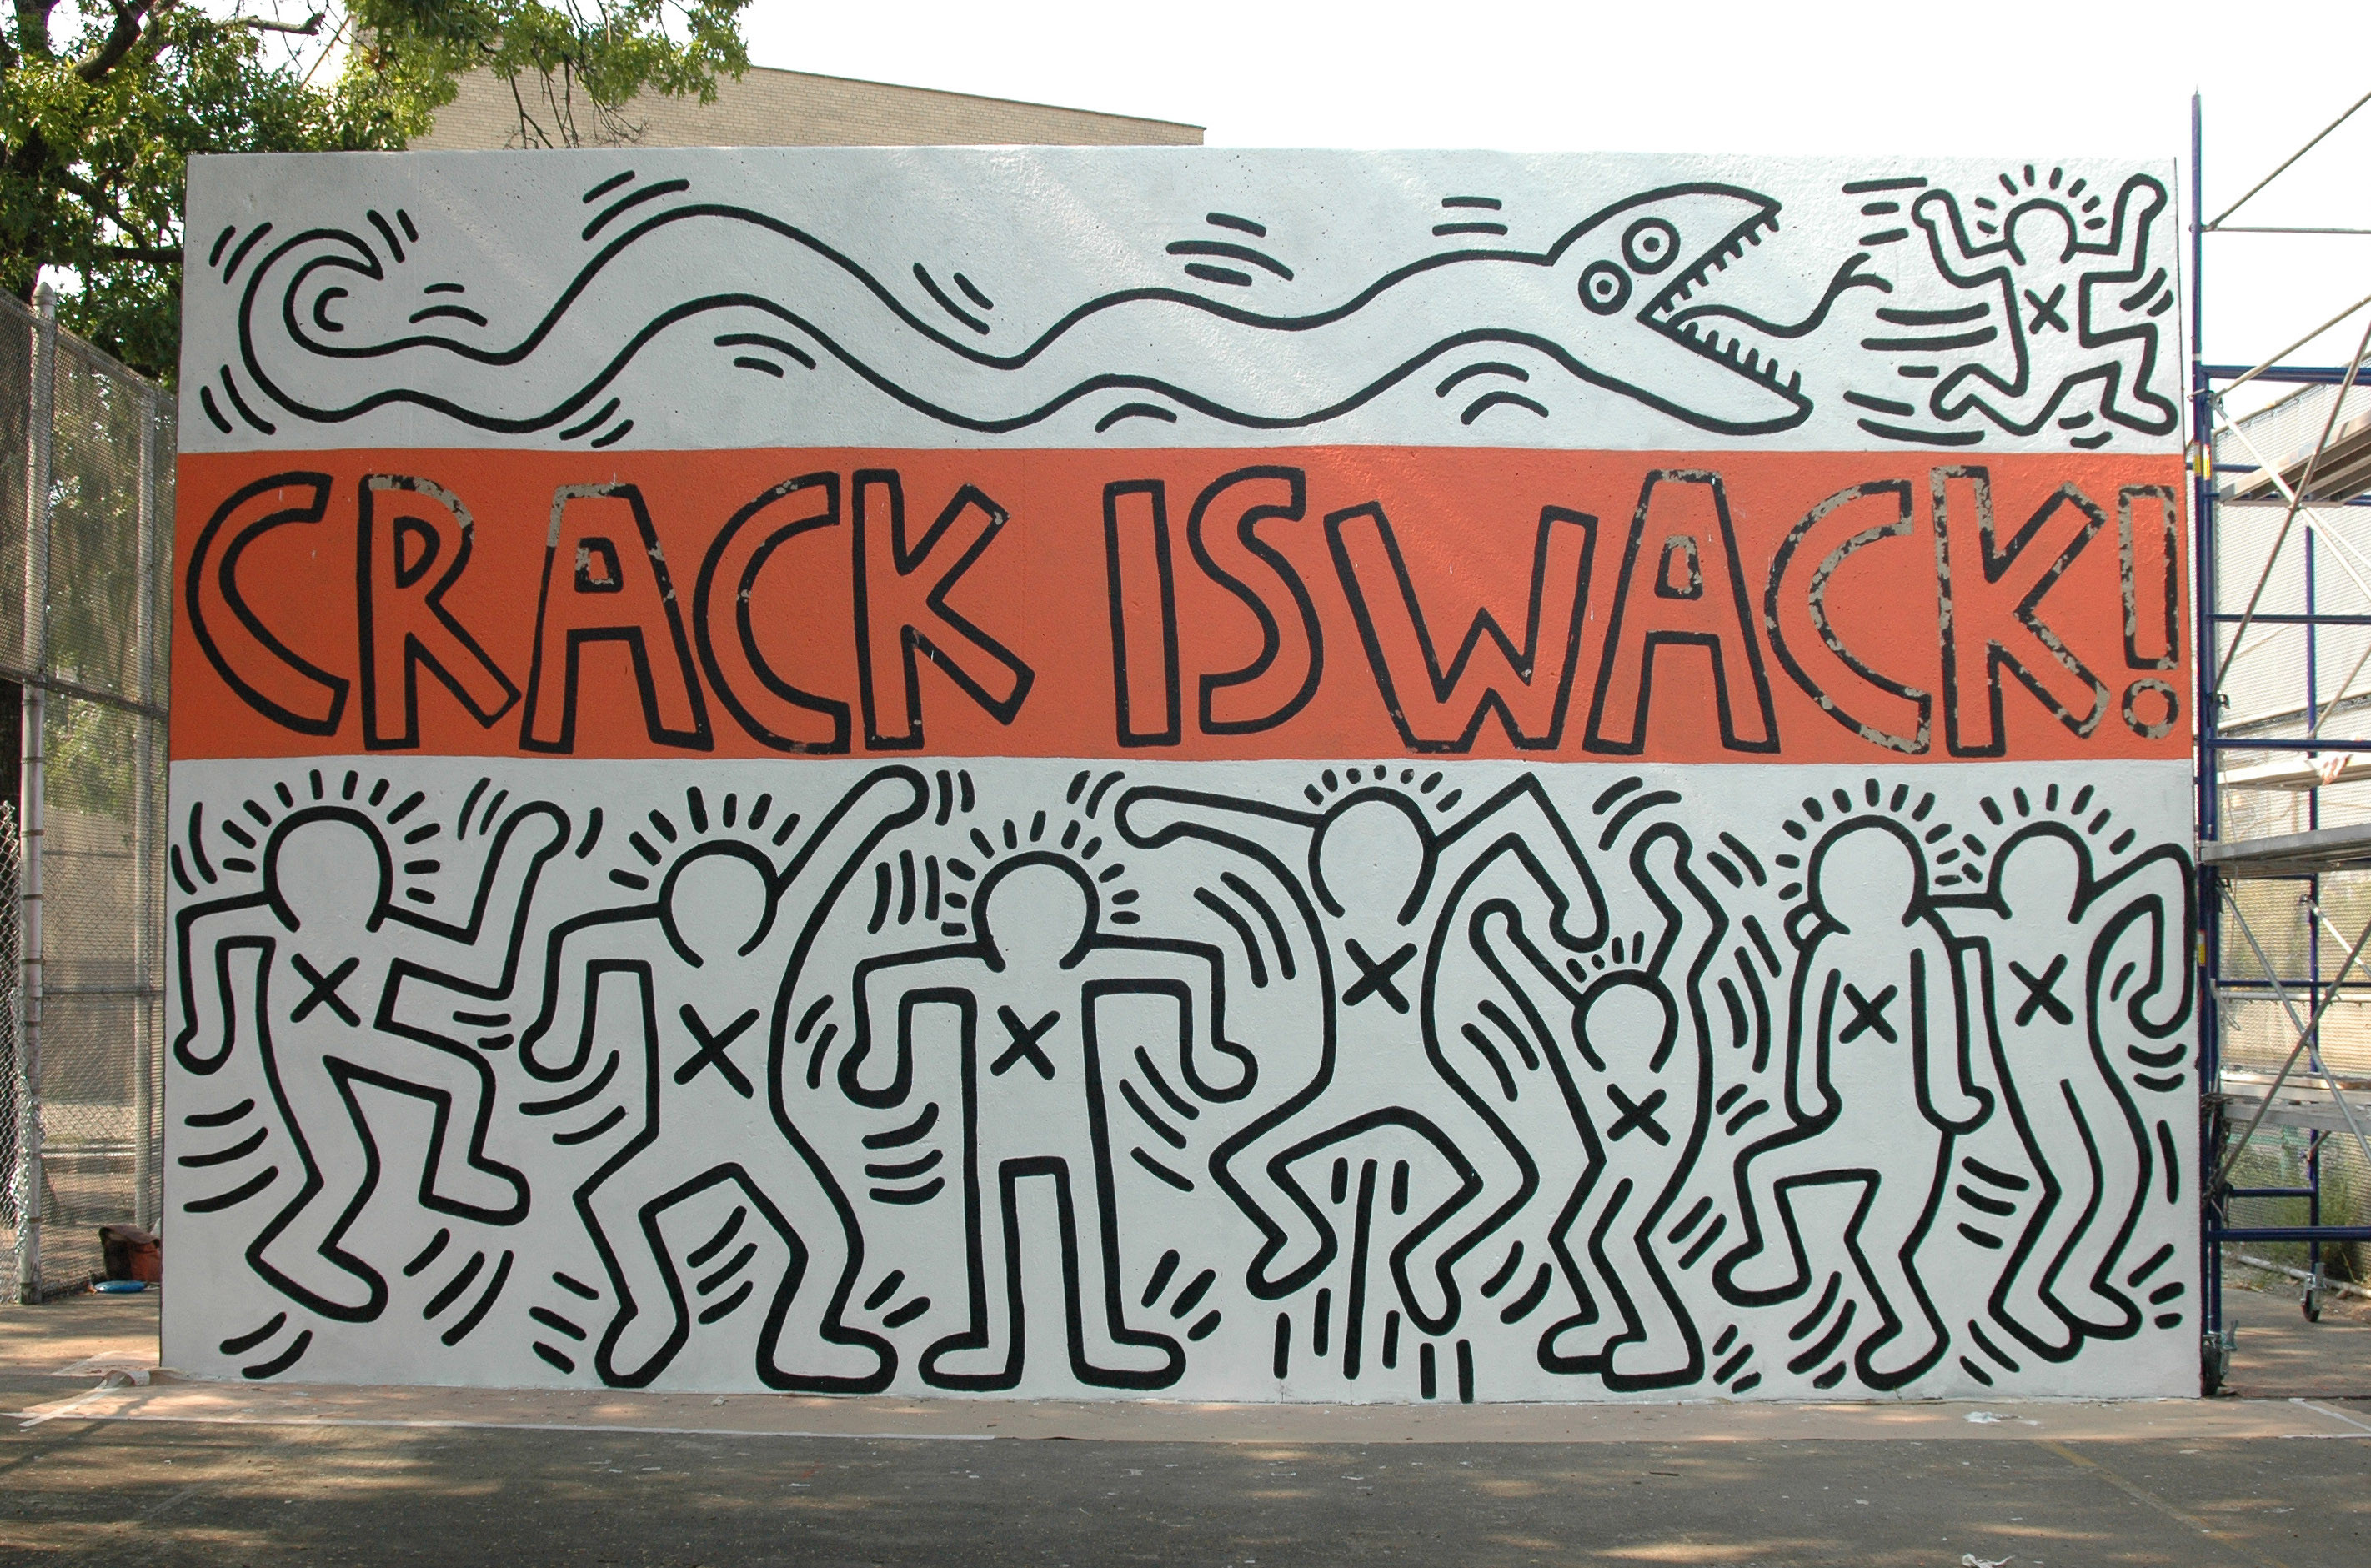 Keith Haring Crack Is Wack